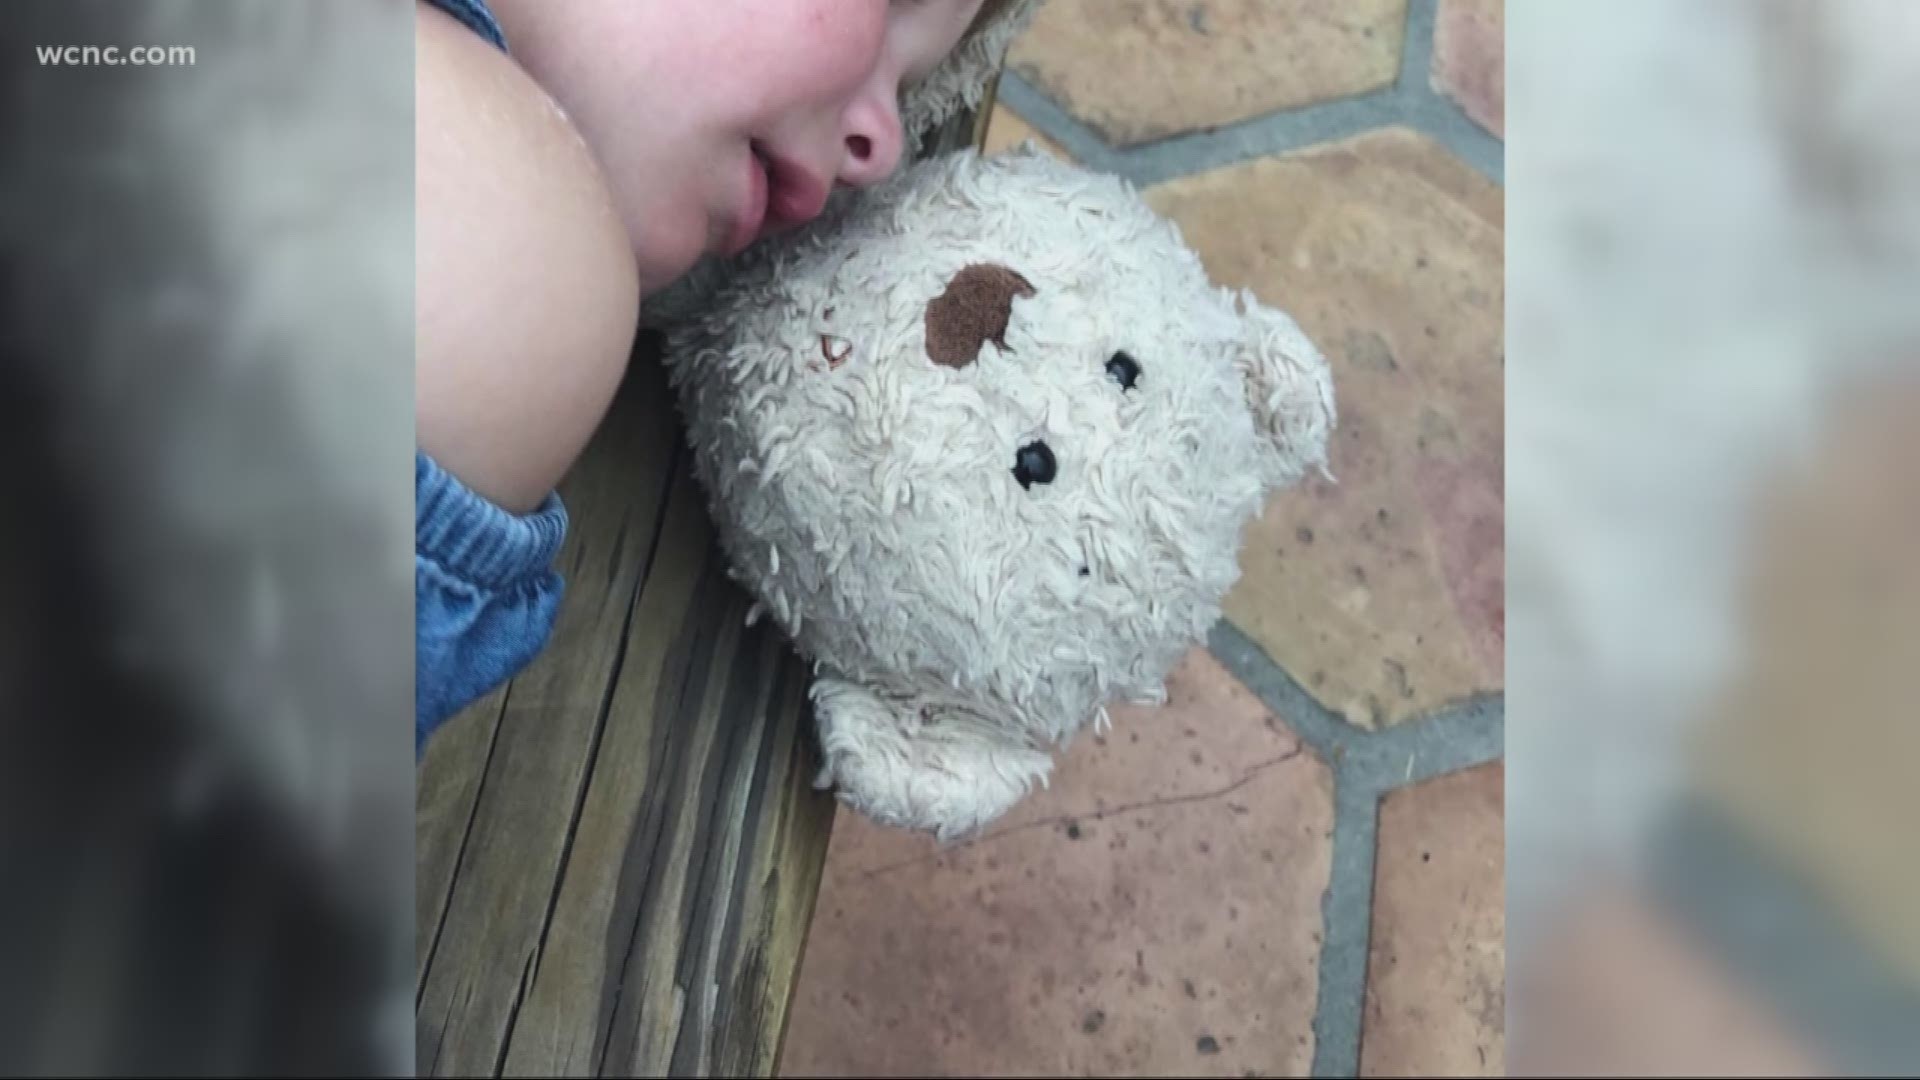 Family offers reward for missing teddy bear